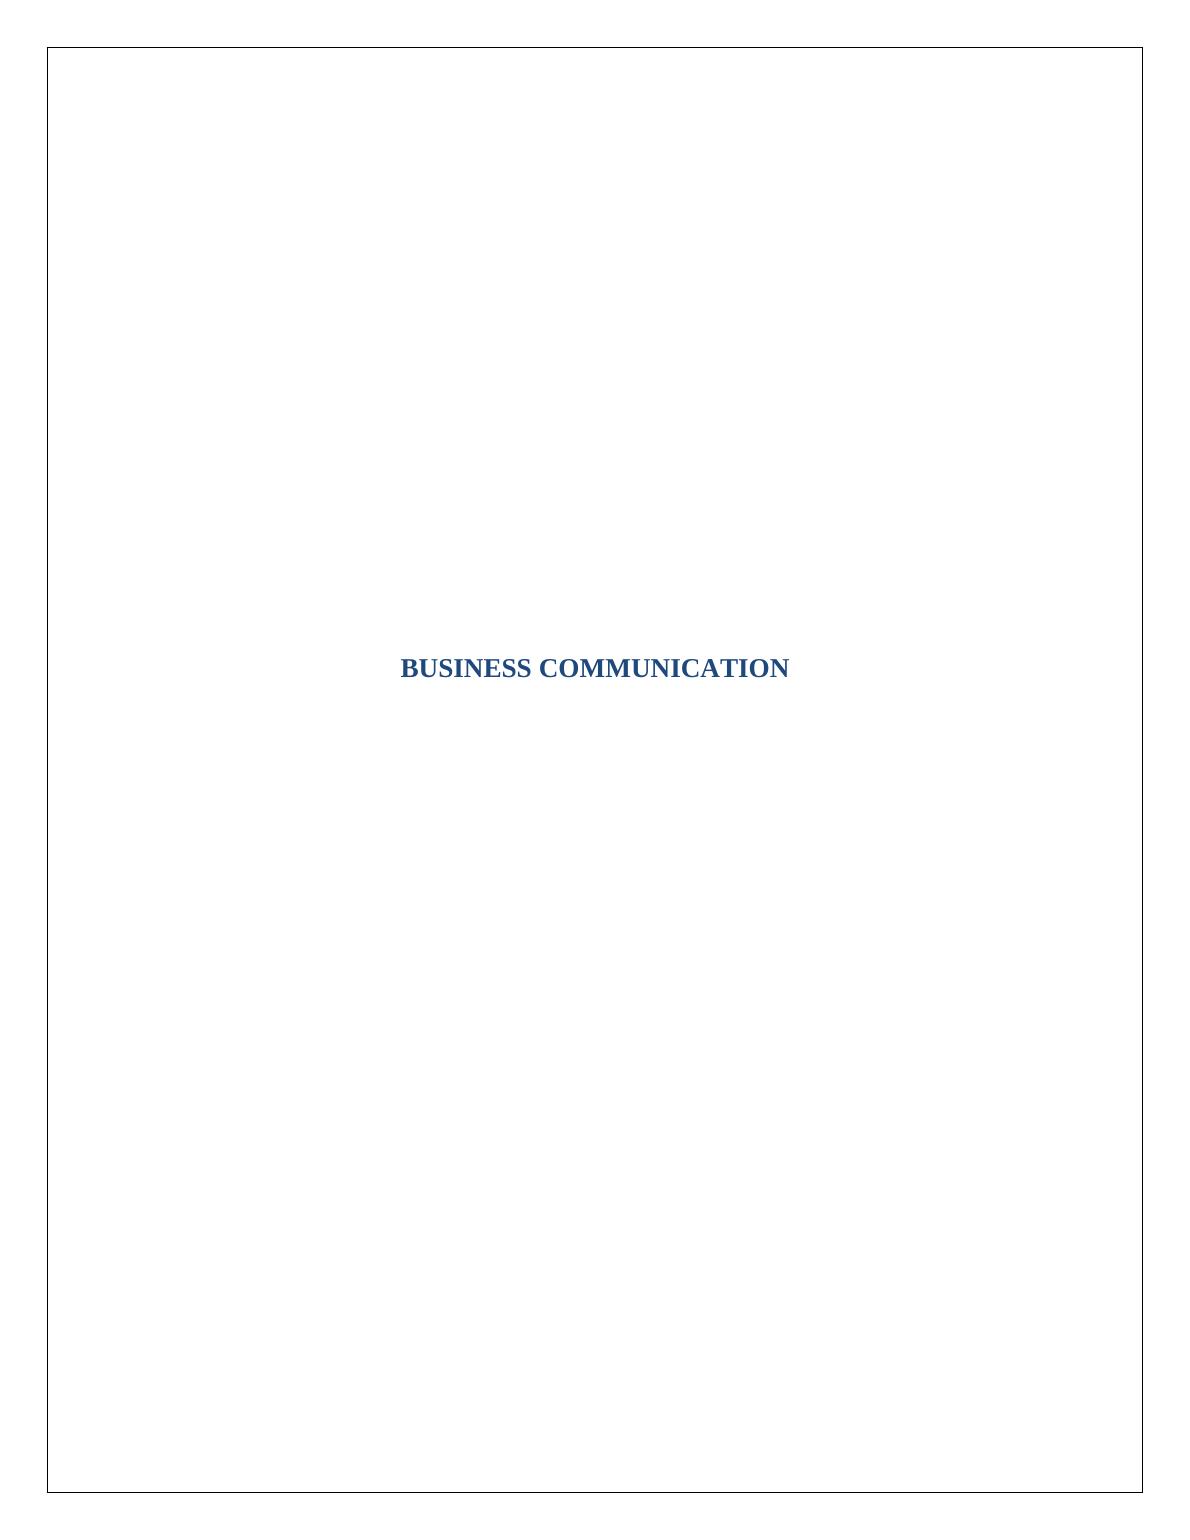 Business Communication Marketing Report 2022_1